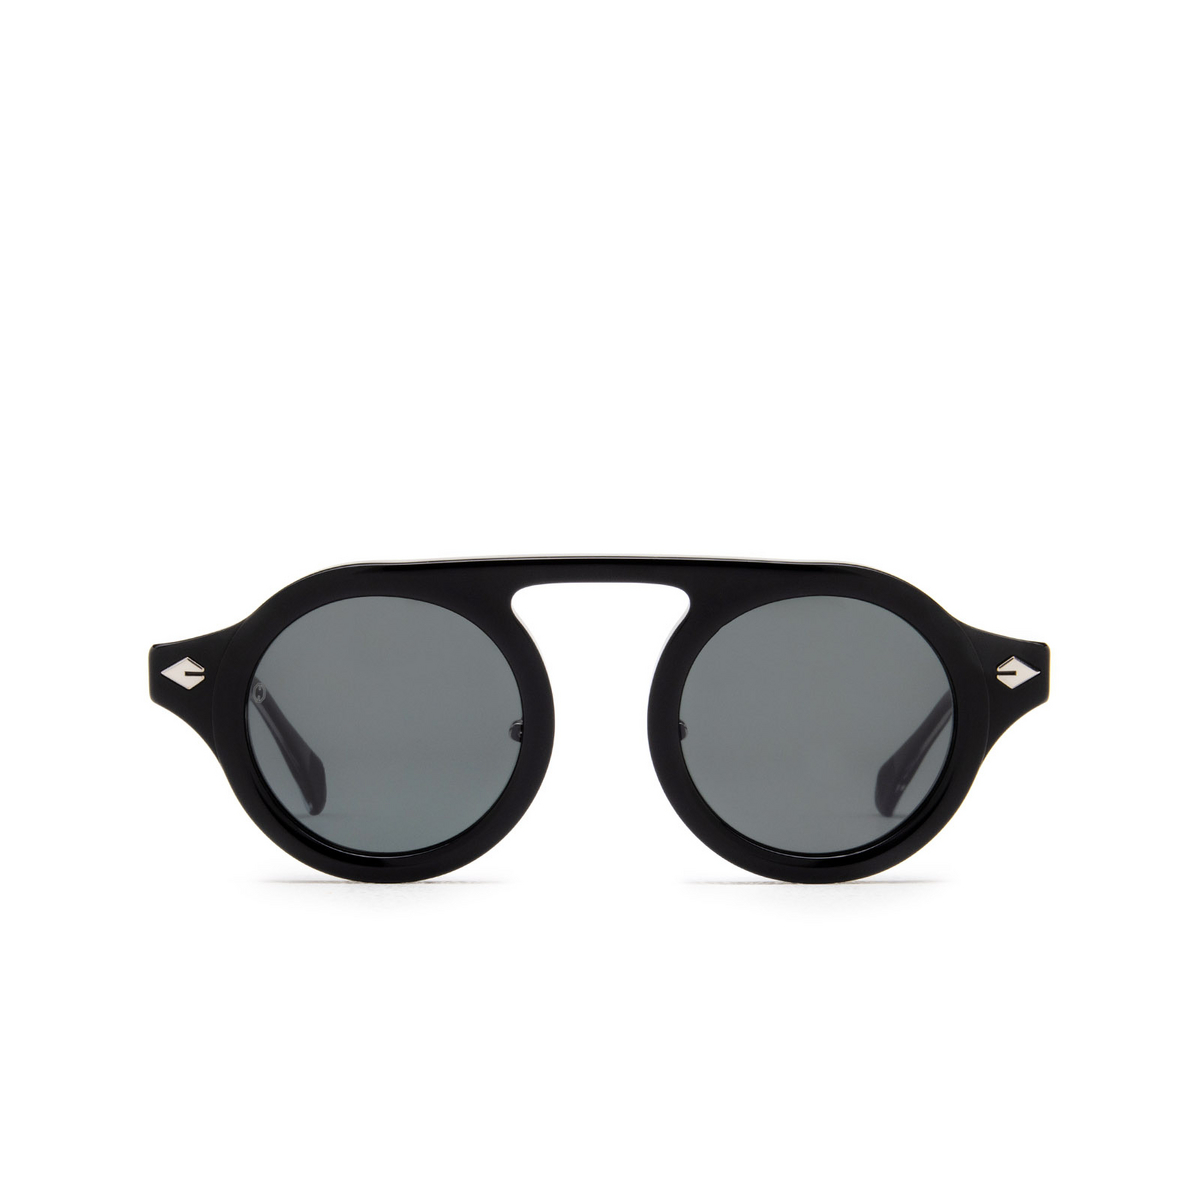 T Henri E2 Sunglasses SHADOW - front view